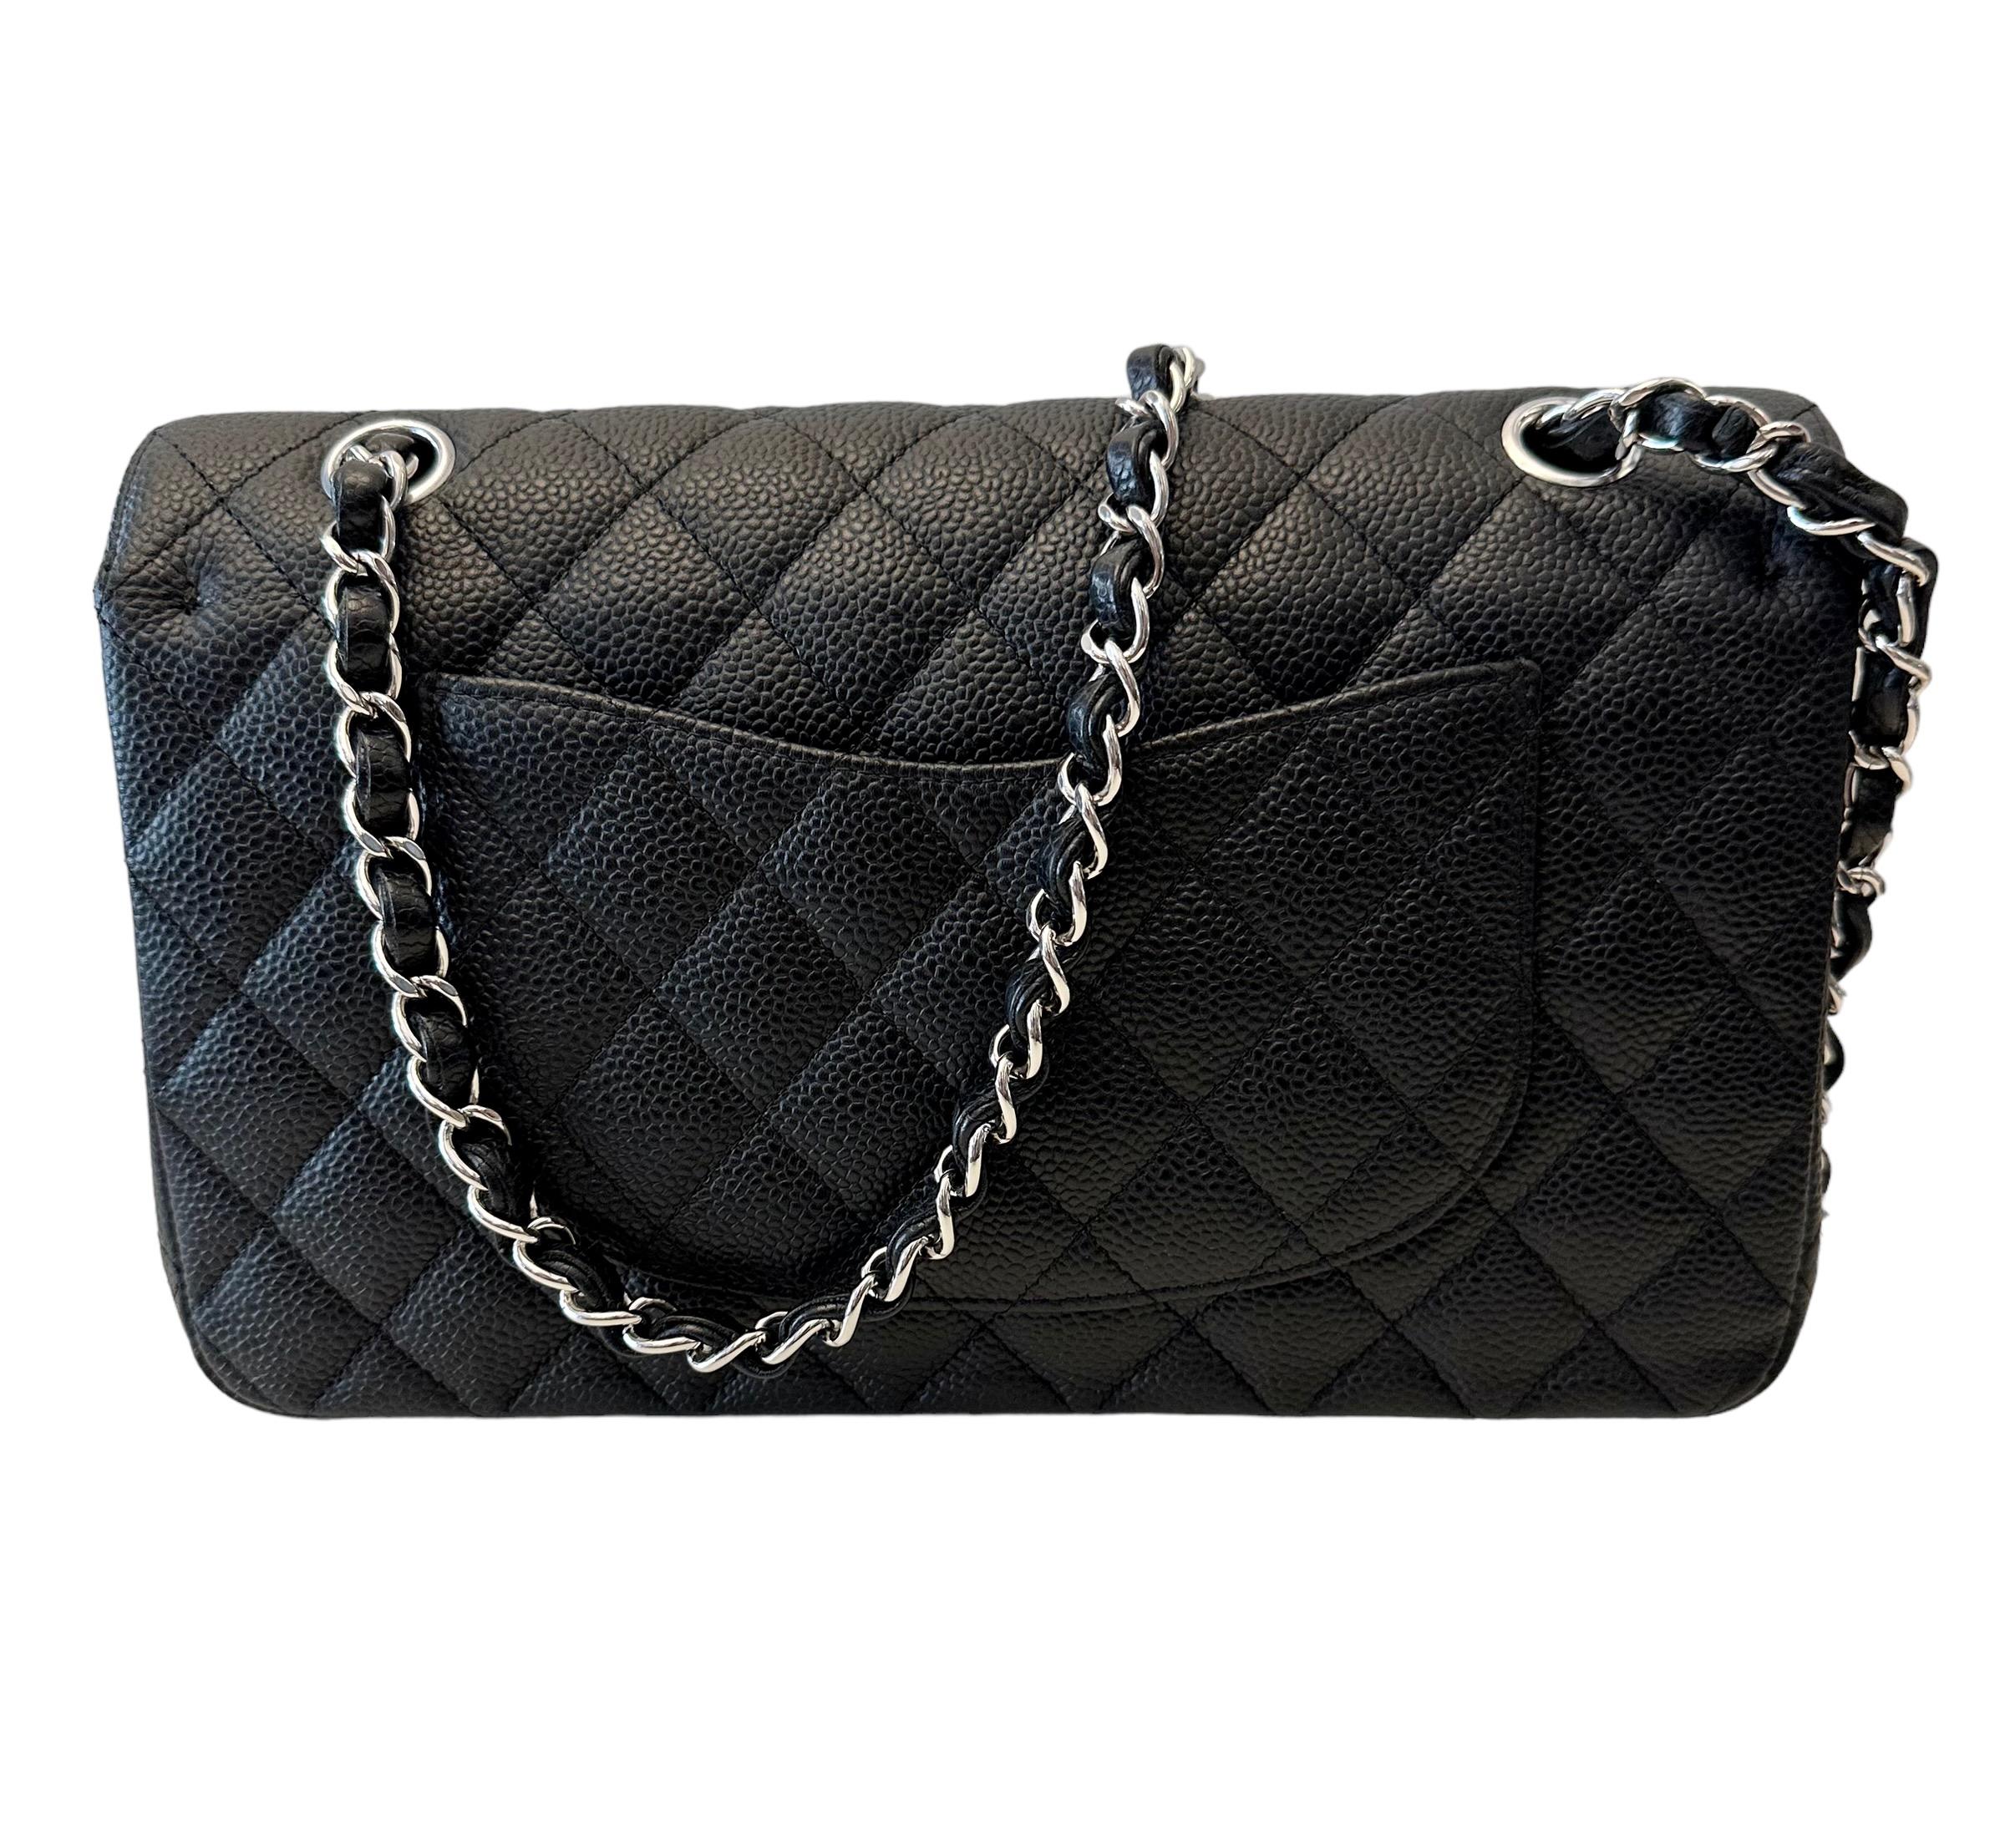 Chanel Black Caviar Leather Double Flap Medium Timeless Classic Bag 1